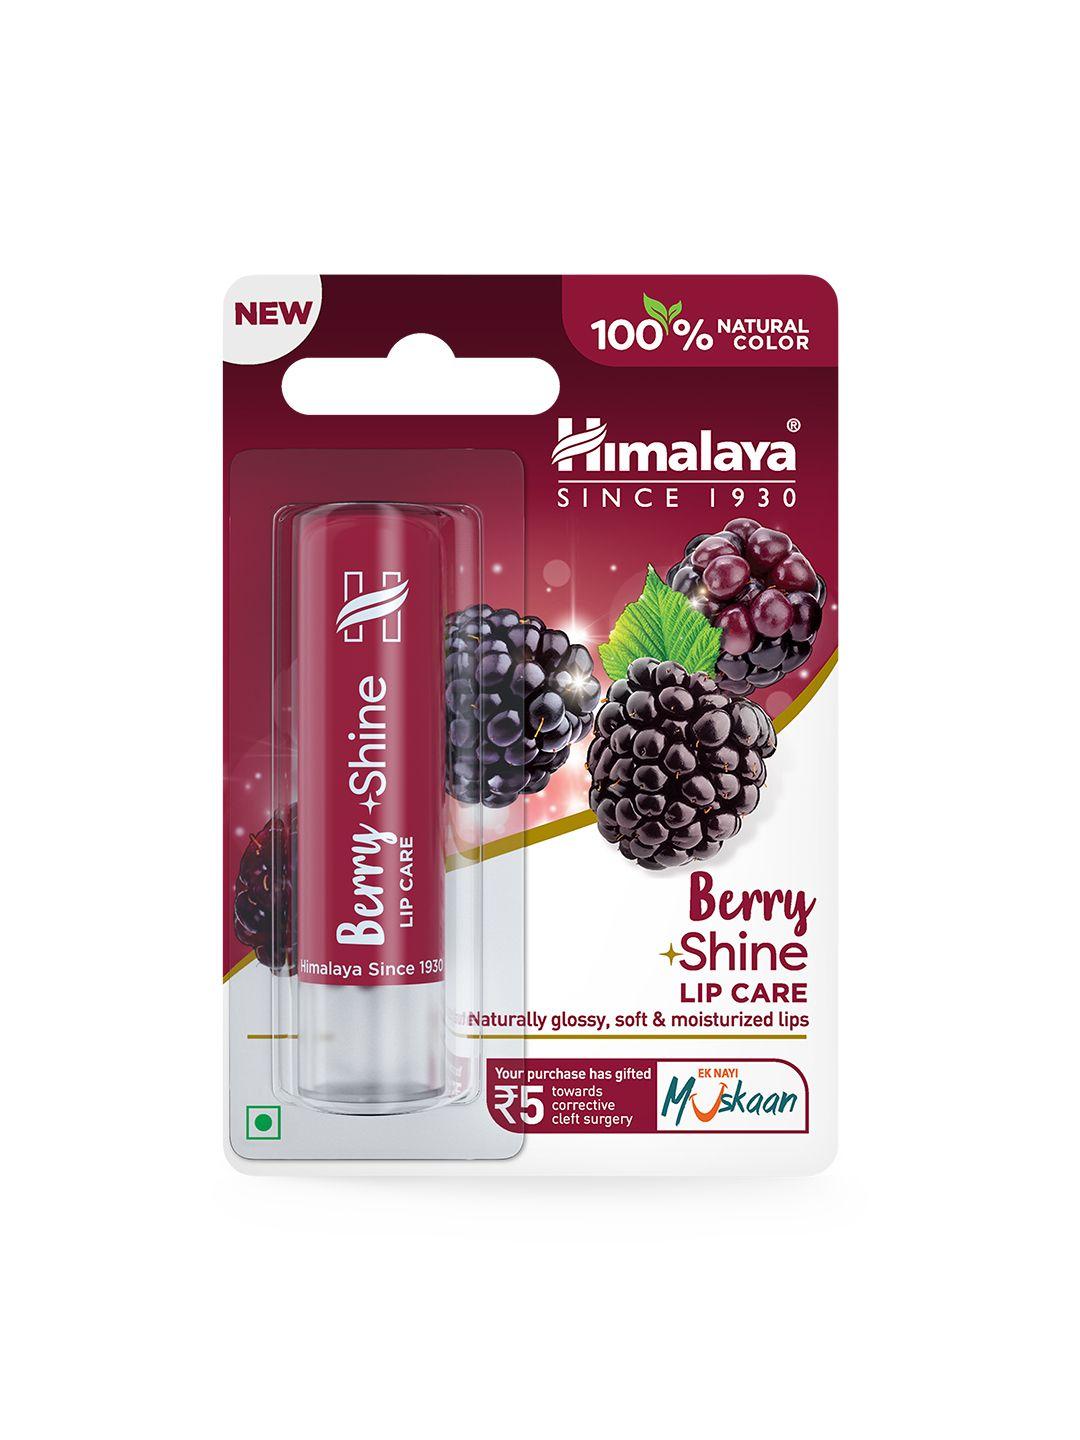 himalaya lip care for glossy soft & moisturized lips 4.5 g - berry shine